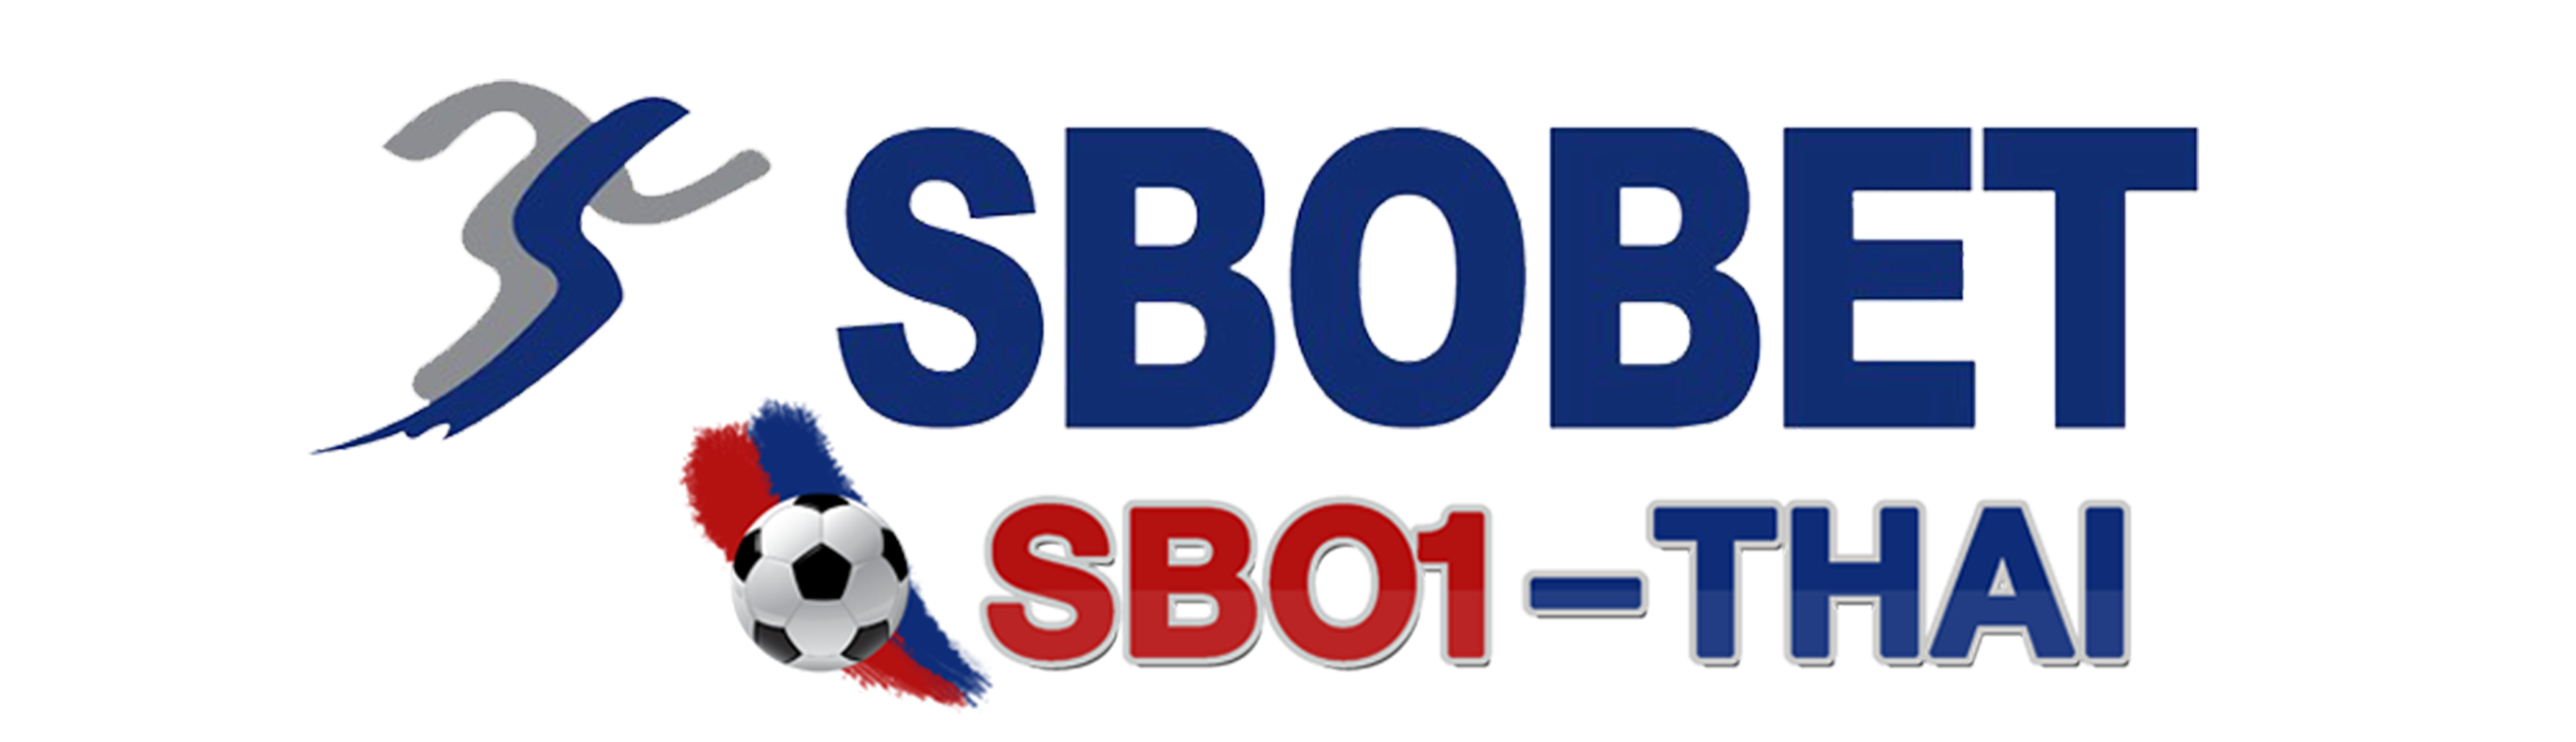 sbo1thai_logo